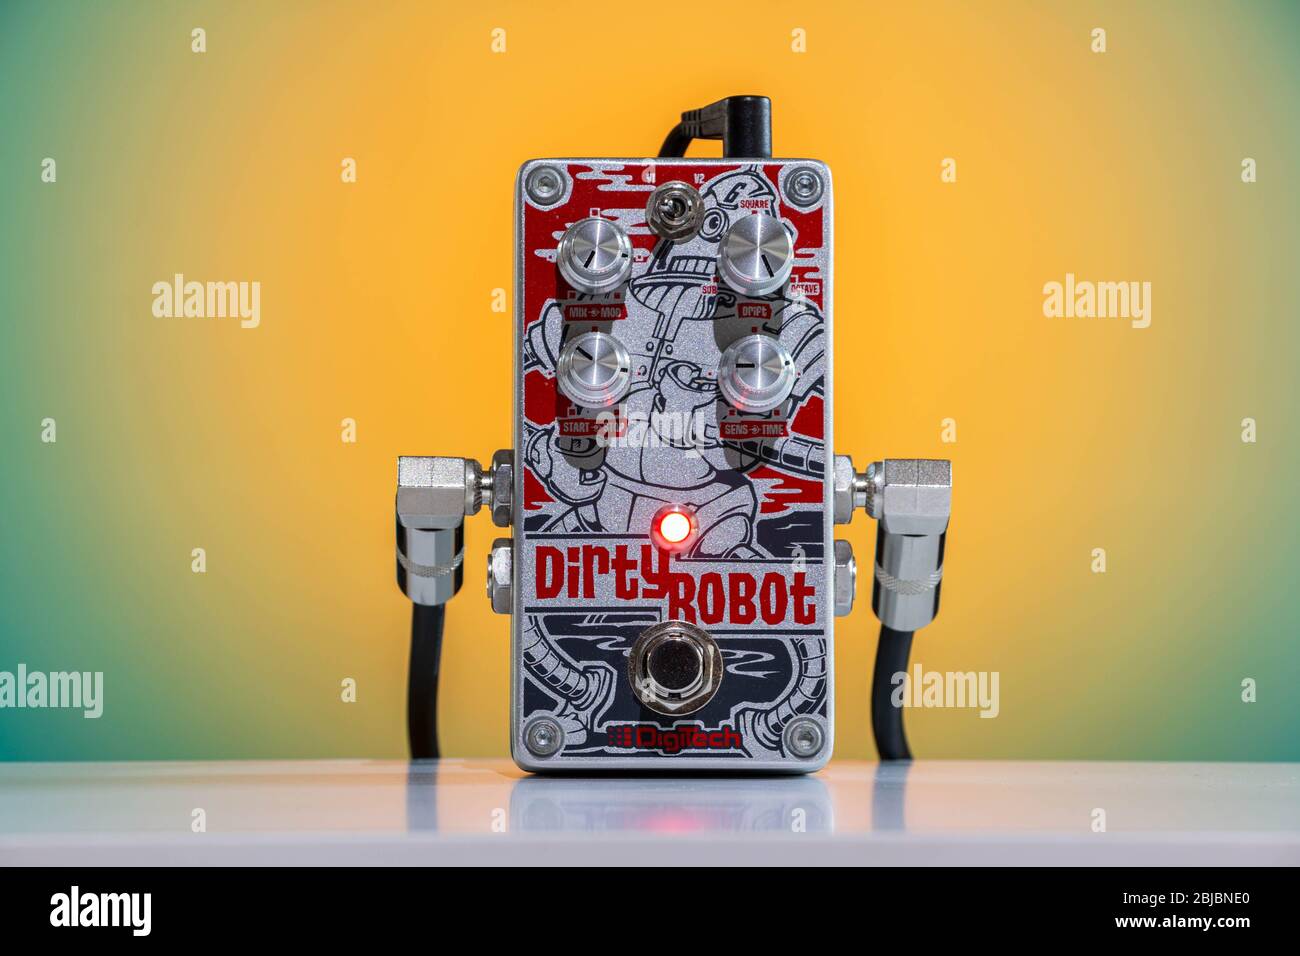 La Marca Digitech Dirty Robot estéreo mini-synth pedal. Un efecto de emulación de sintetizador para guitarra eléctrica o bajo. Foto de stock